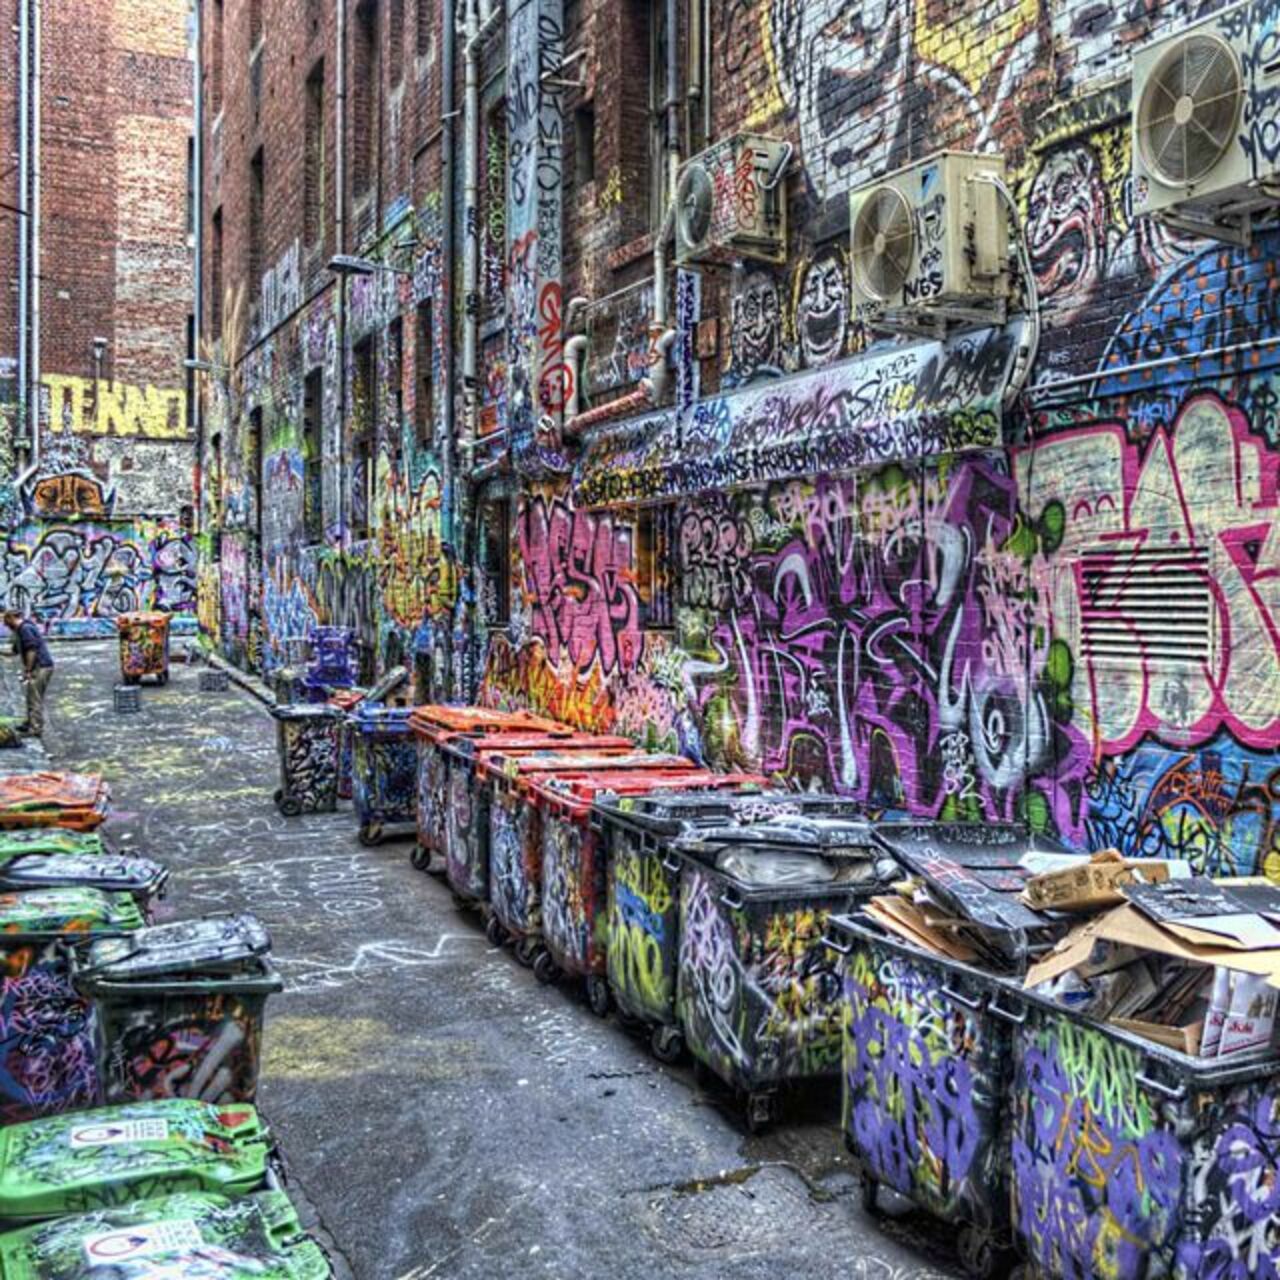 Graffiti happens, Melbourne#streetart #mural #graffiti #art https://t.co/MRy8AD01eo